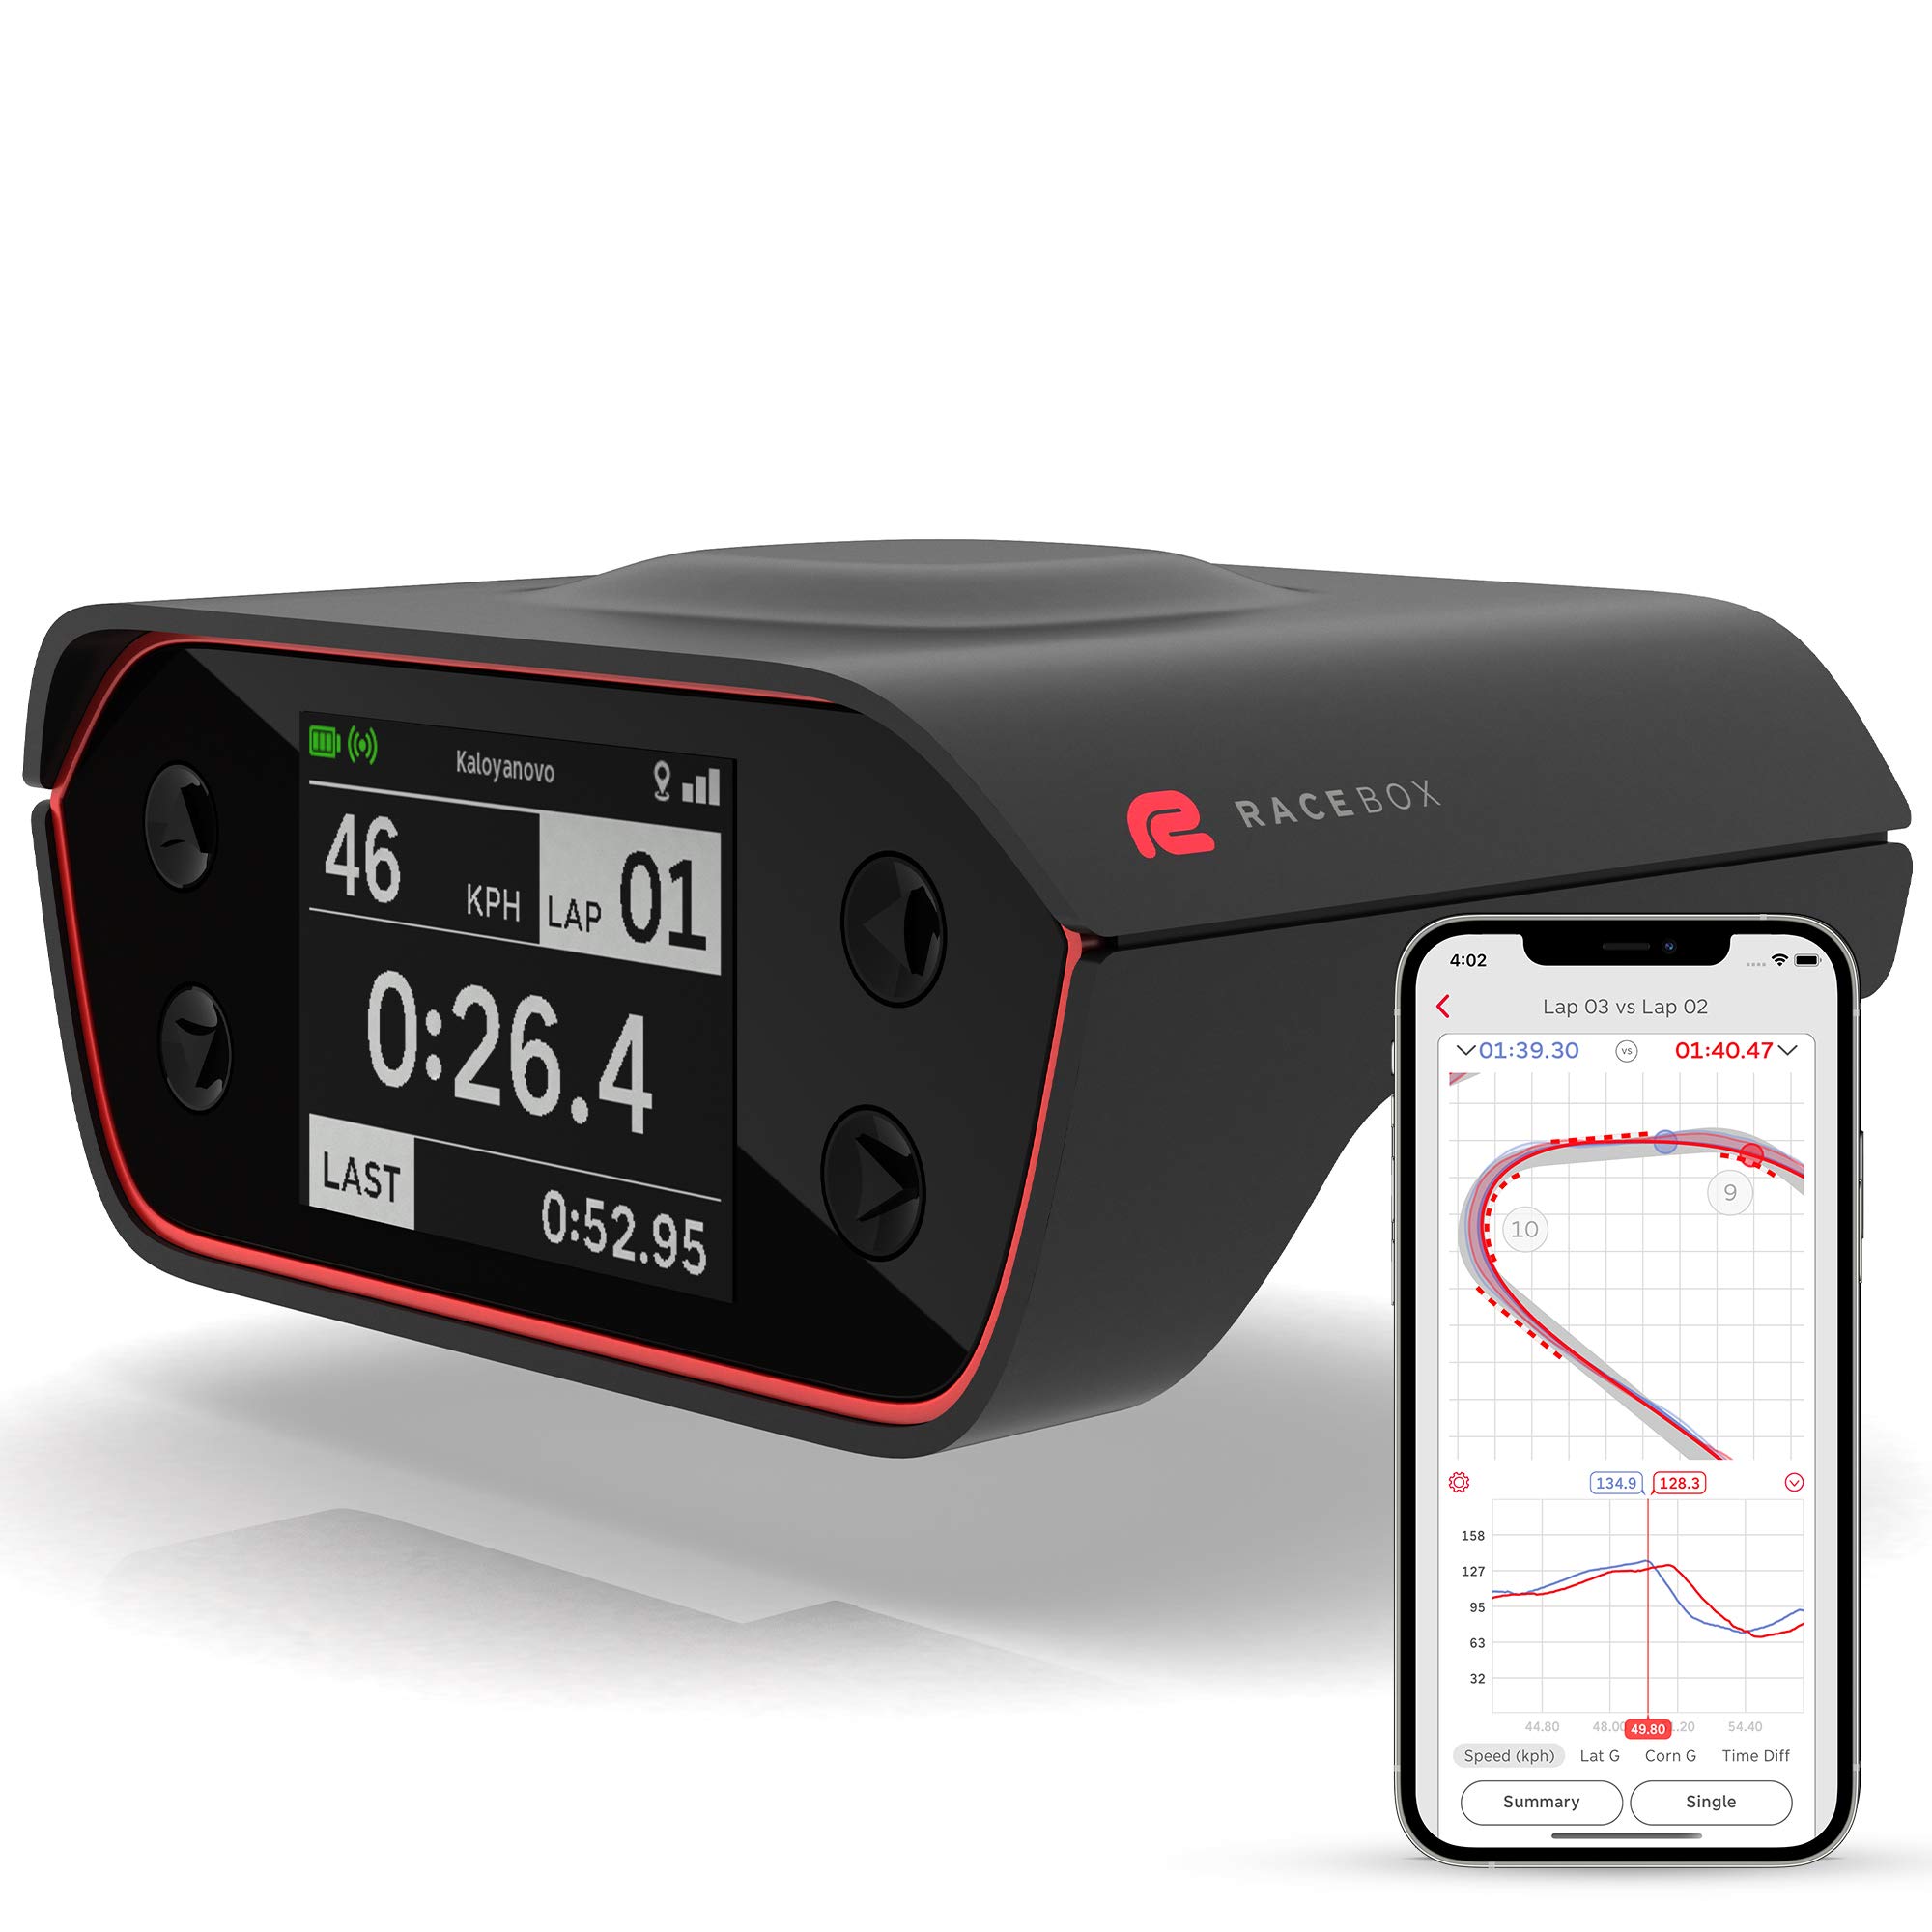  RaceBox صندوق قياس الأداء الرسمي 10 هرتز GPS مع تطبيق الهاتف المحمول - جهاز توقيت دورة السيارة وجهاز السحب - مسجل بيا...